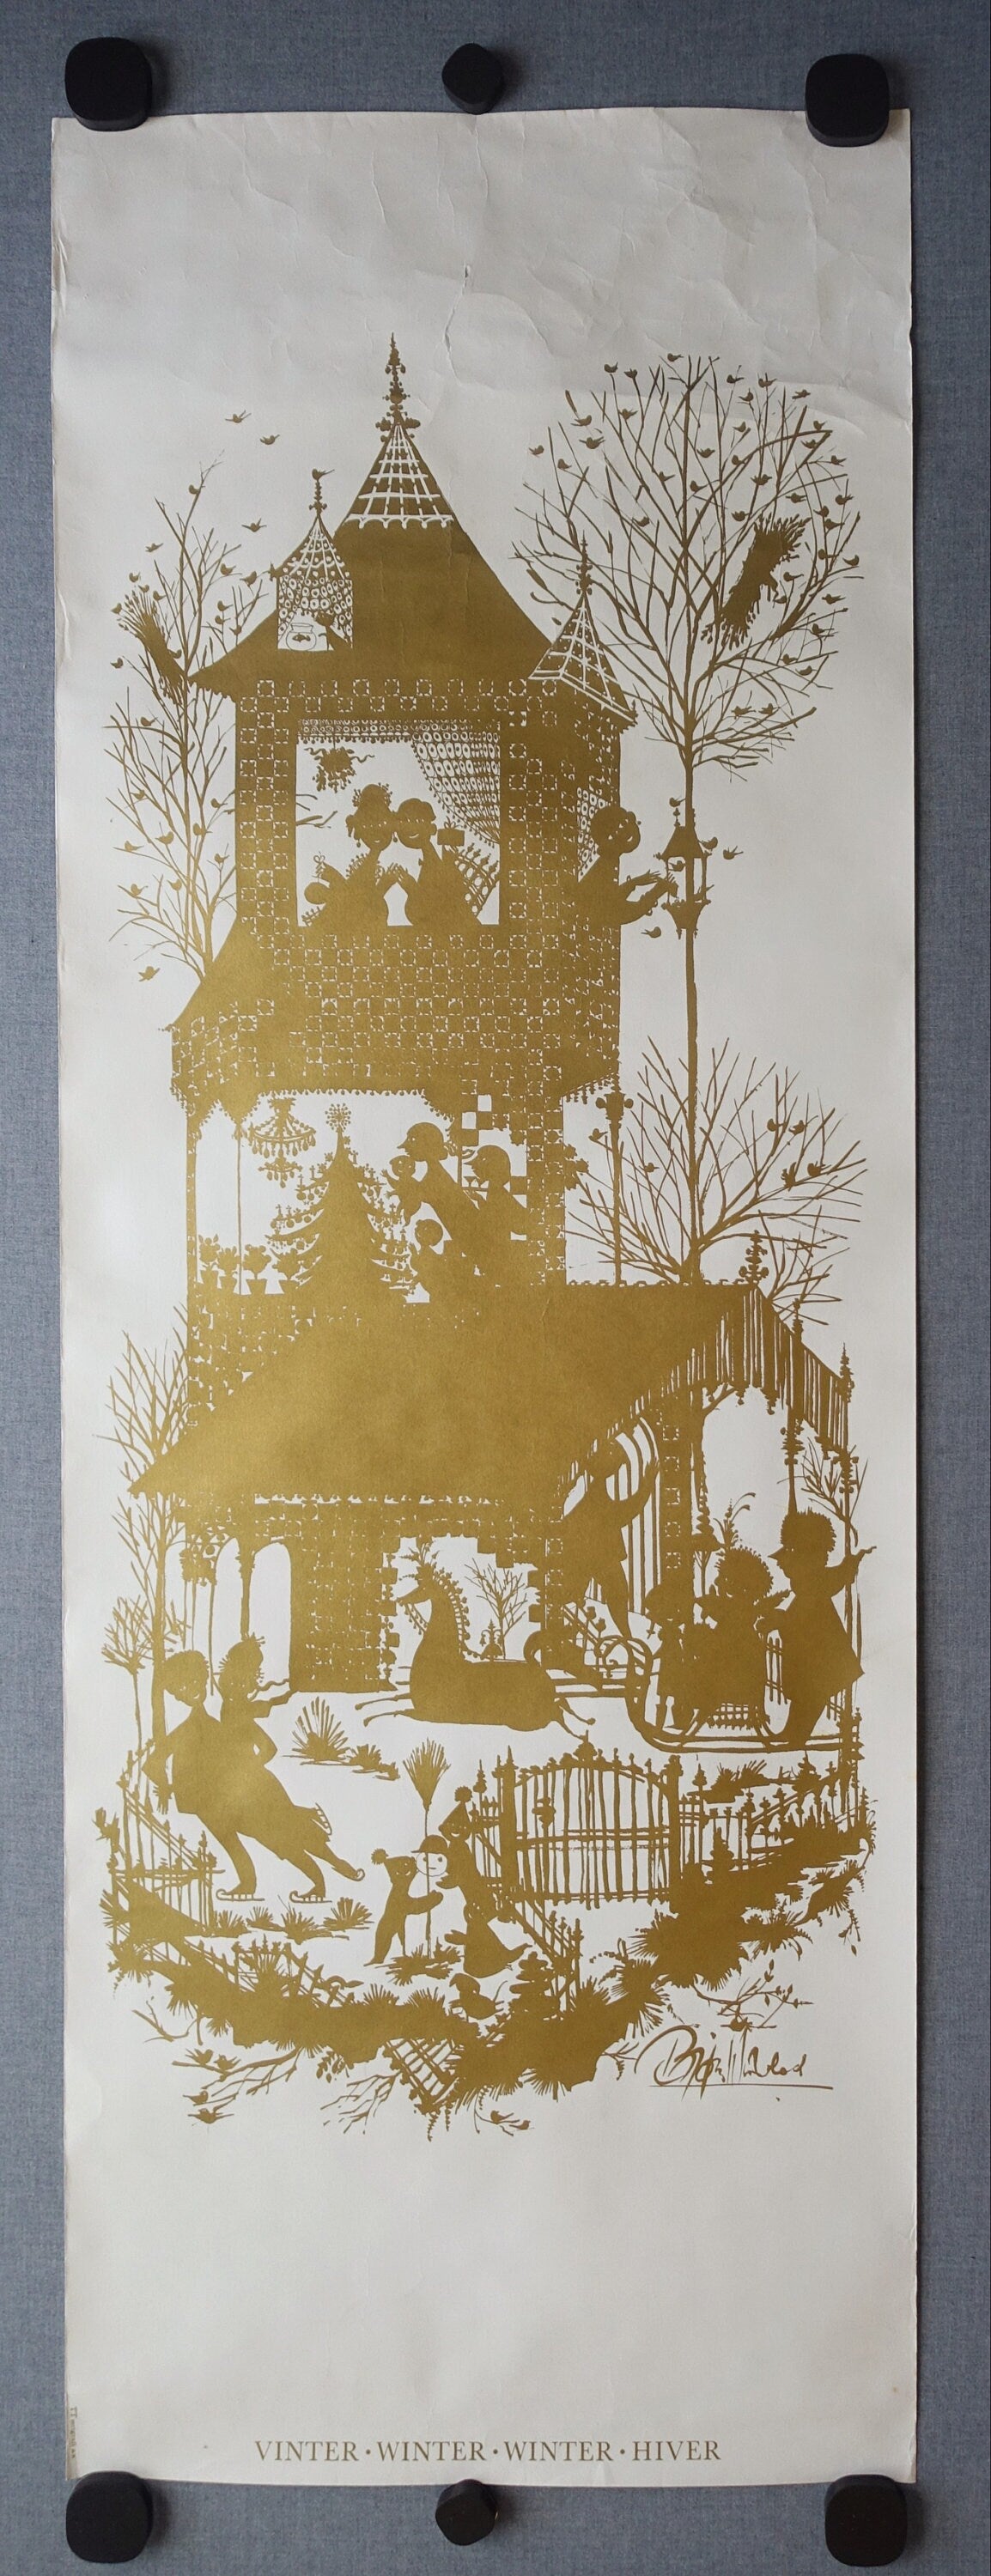 1970s Winter Season by Wiinblad (Golden Version) - Original Vintage Poster